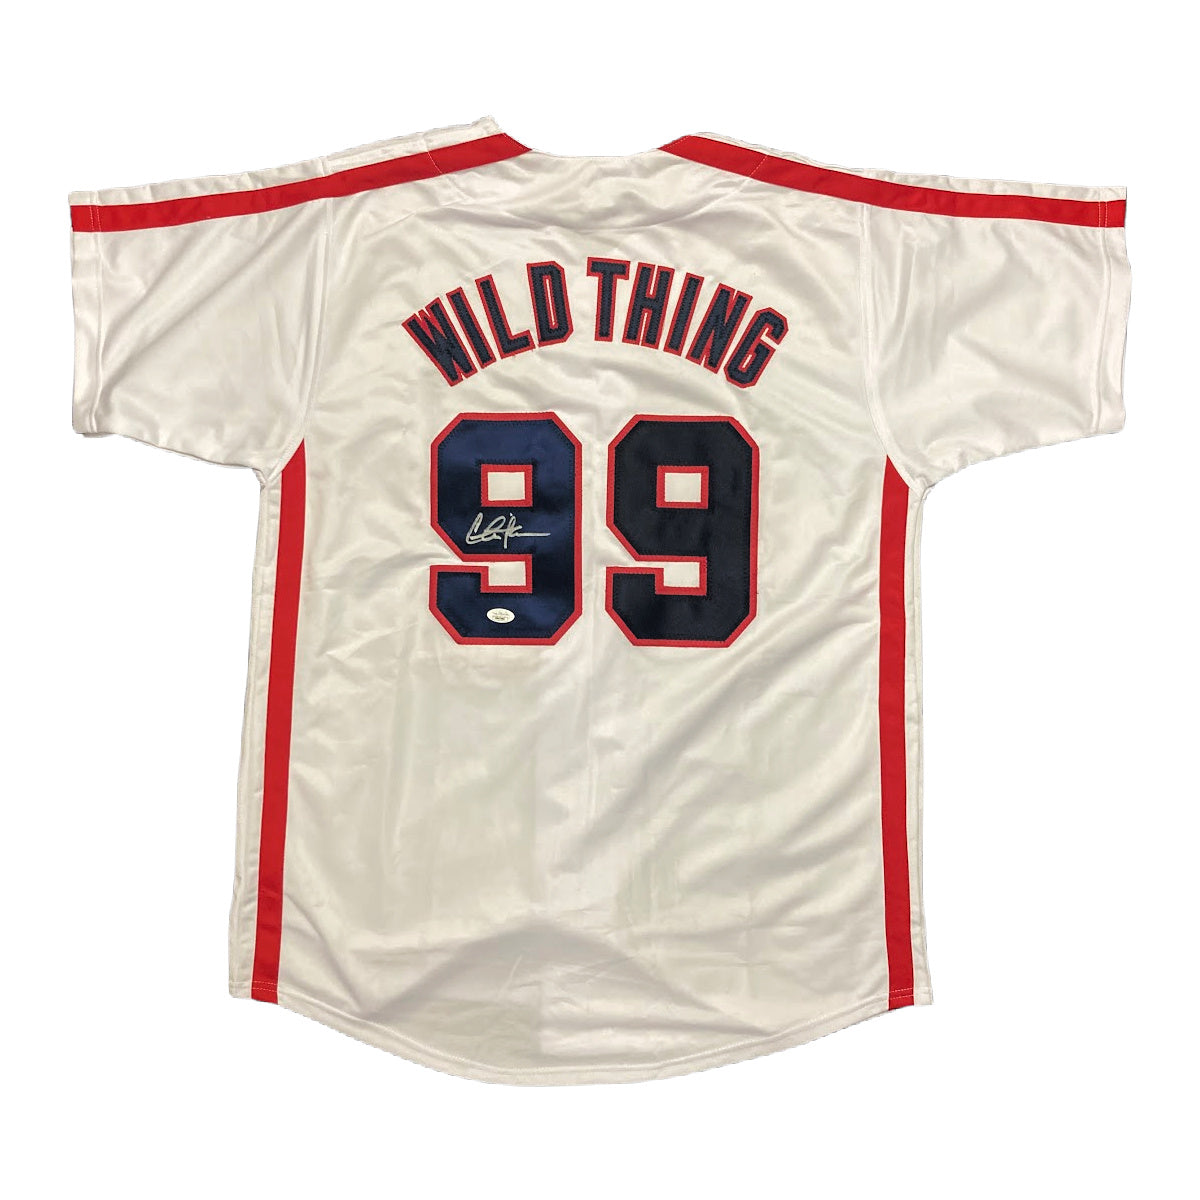 Rick Vaughn Wild Thing Major League Baseball Jersey